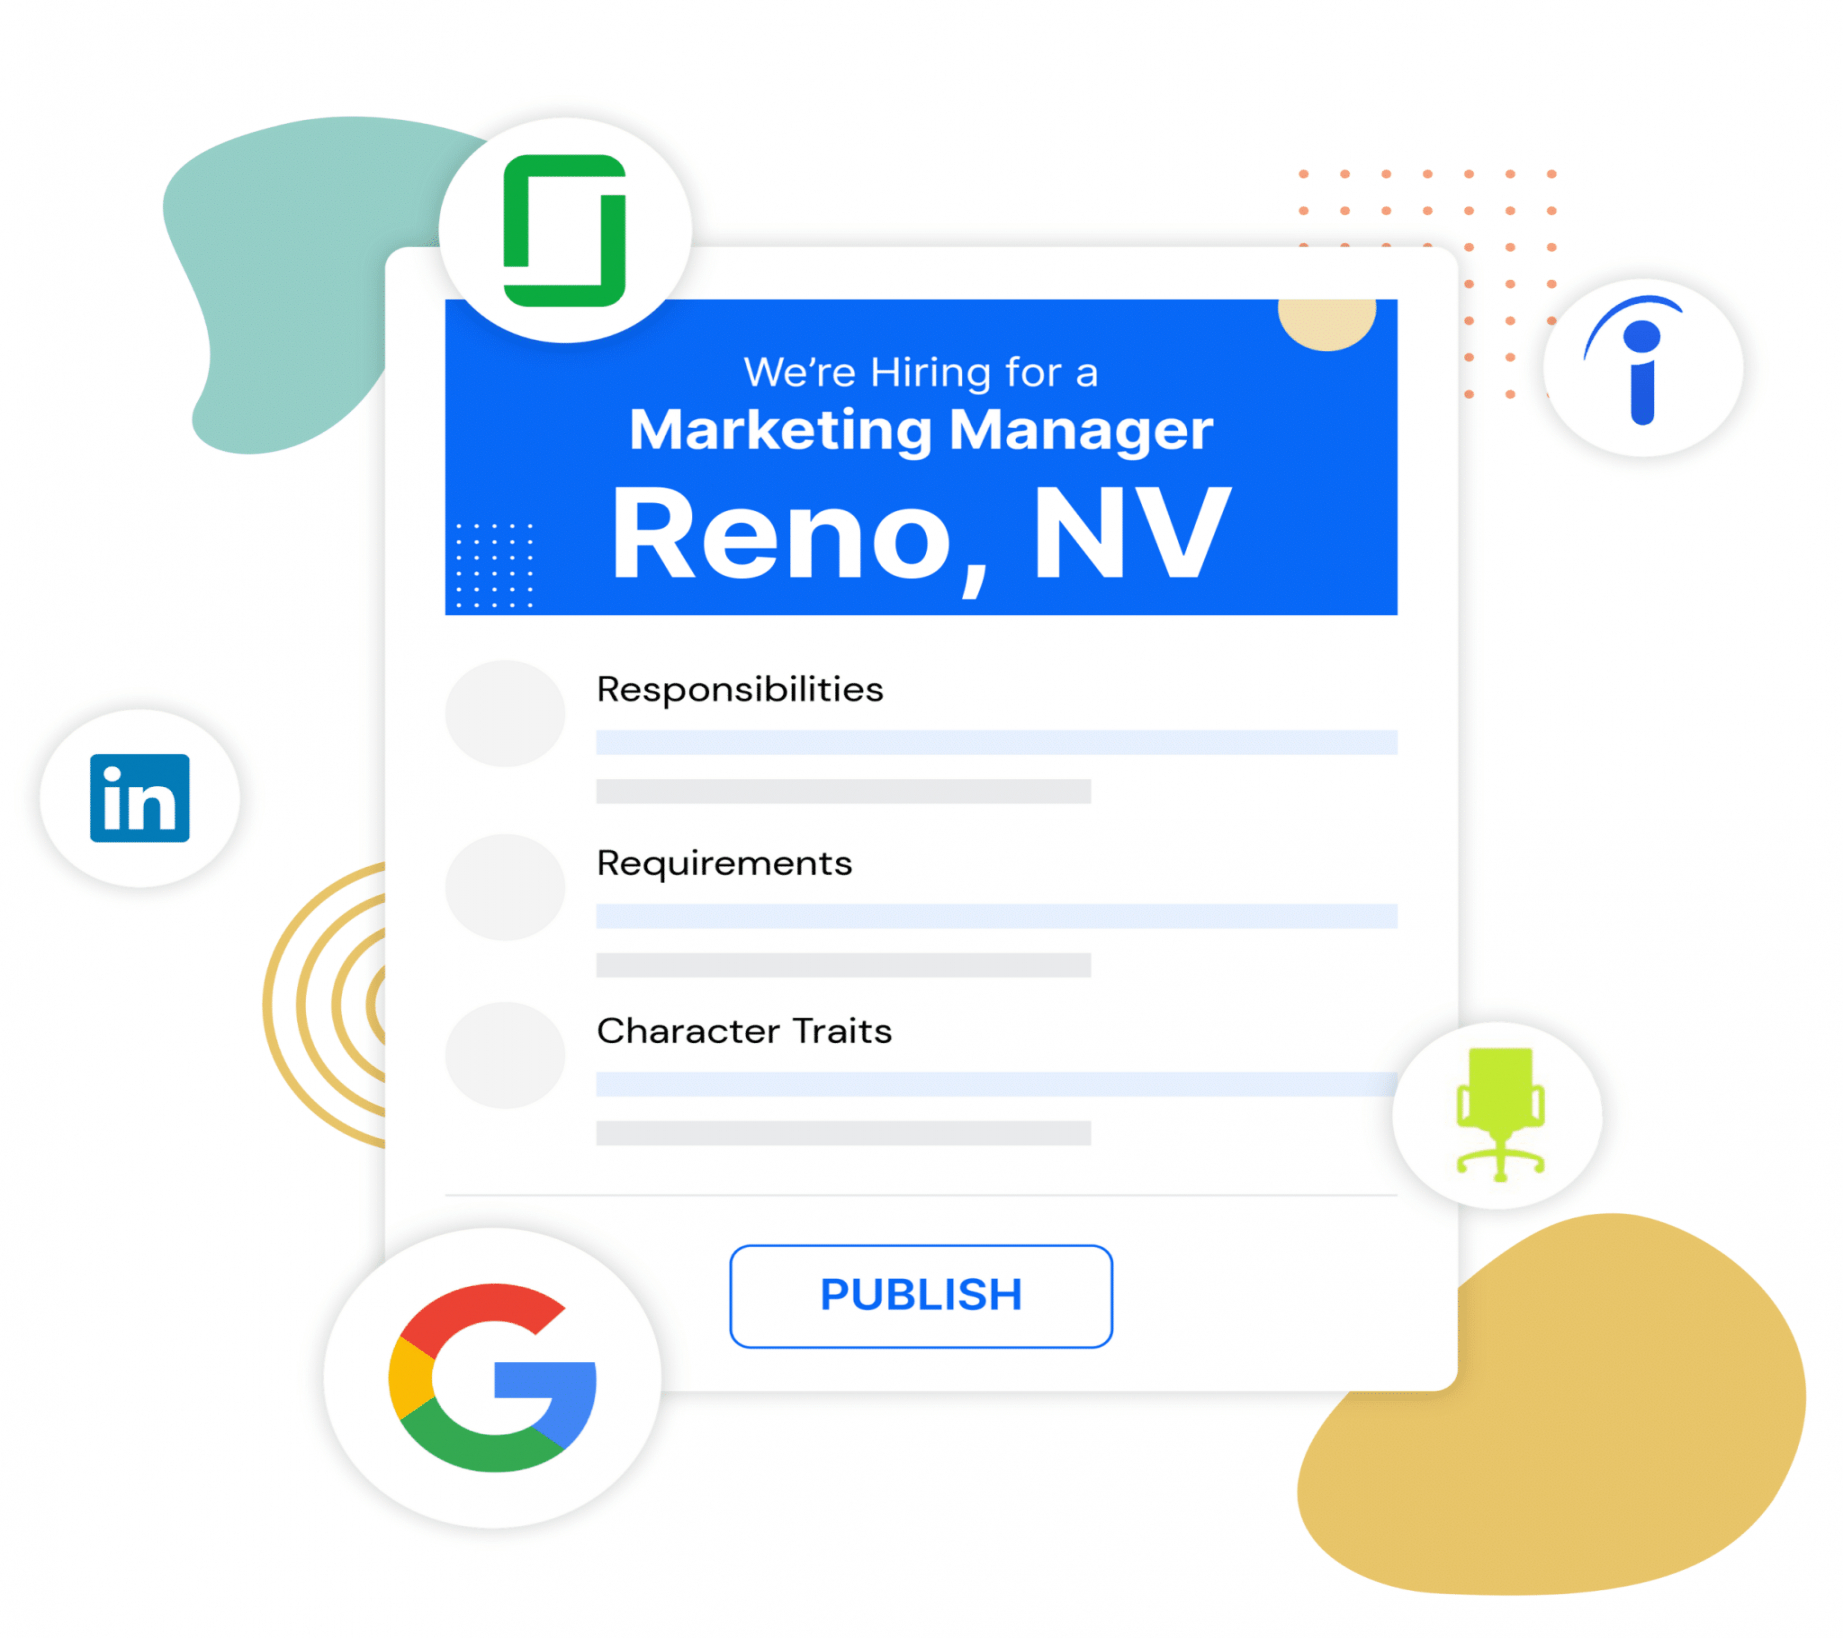 Reno Jobs Hiring Immediately - Reno Jobs Now Hiring: Apply Today!